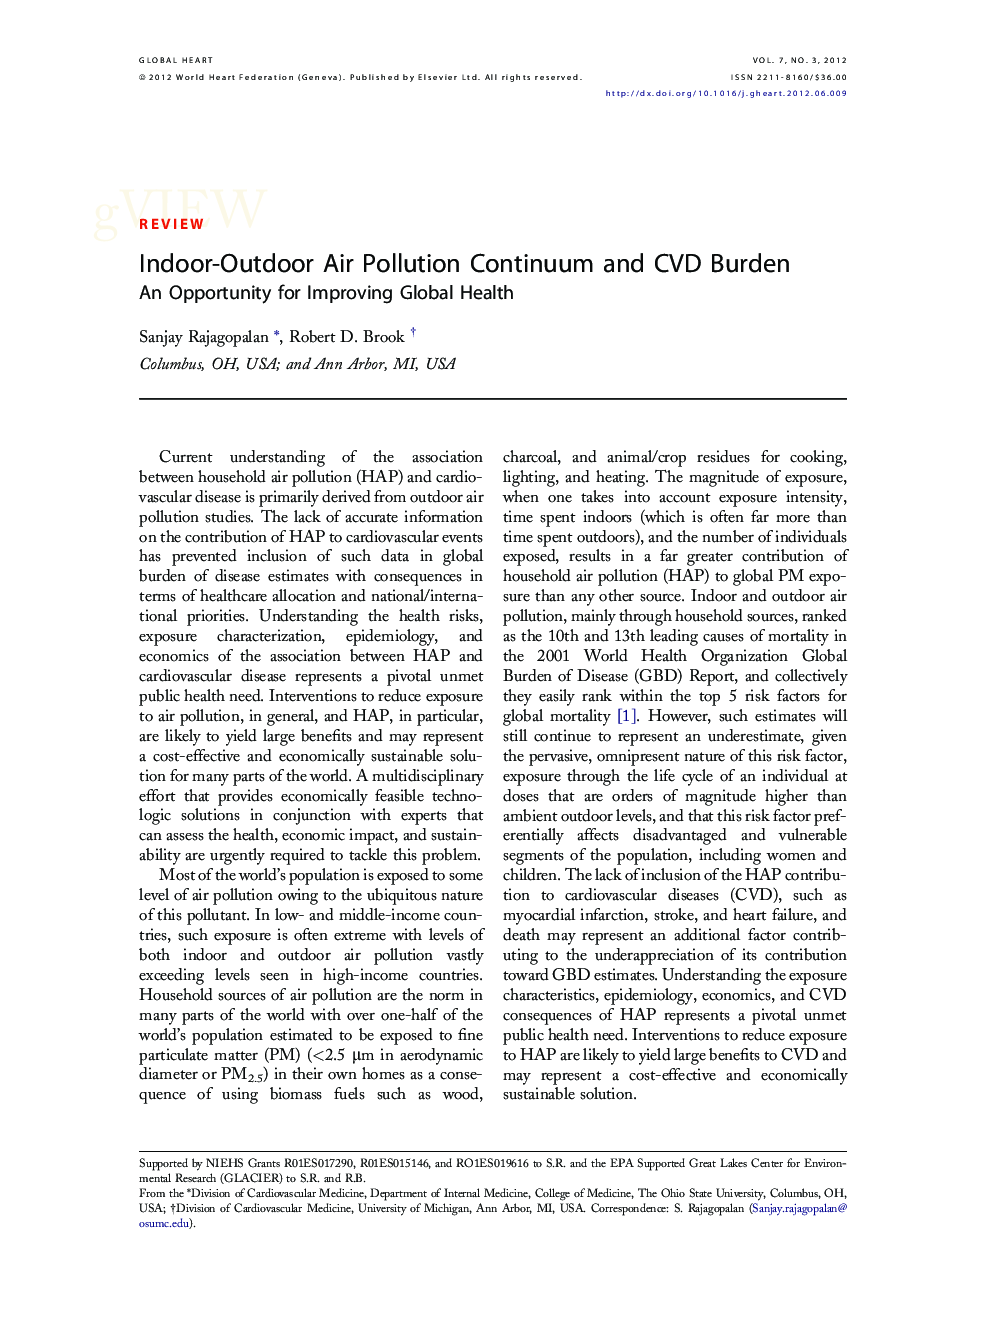 Indoor-Outdoor Air Pollution Continuum and CVD Burden